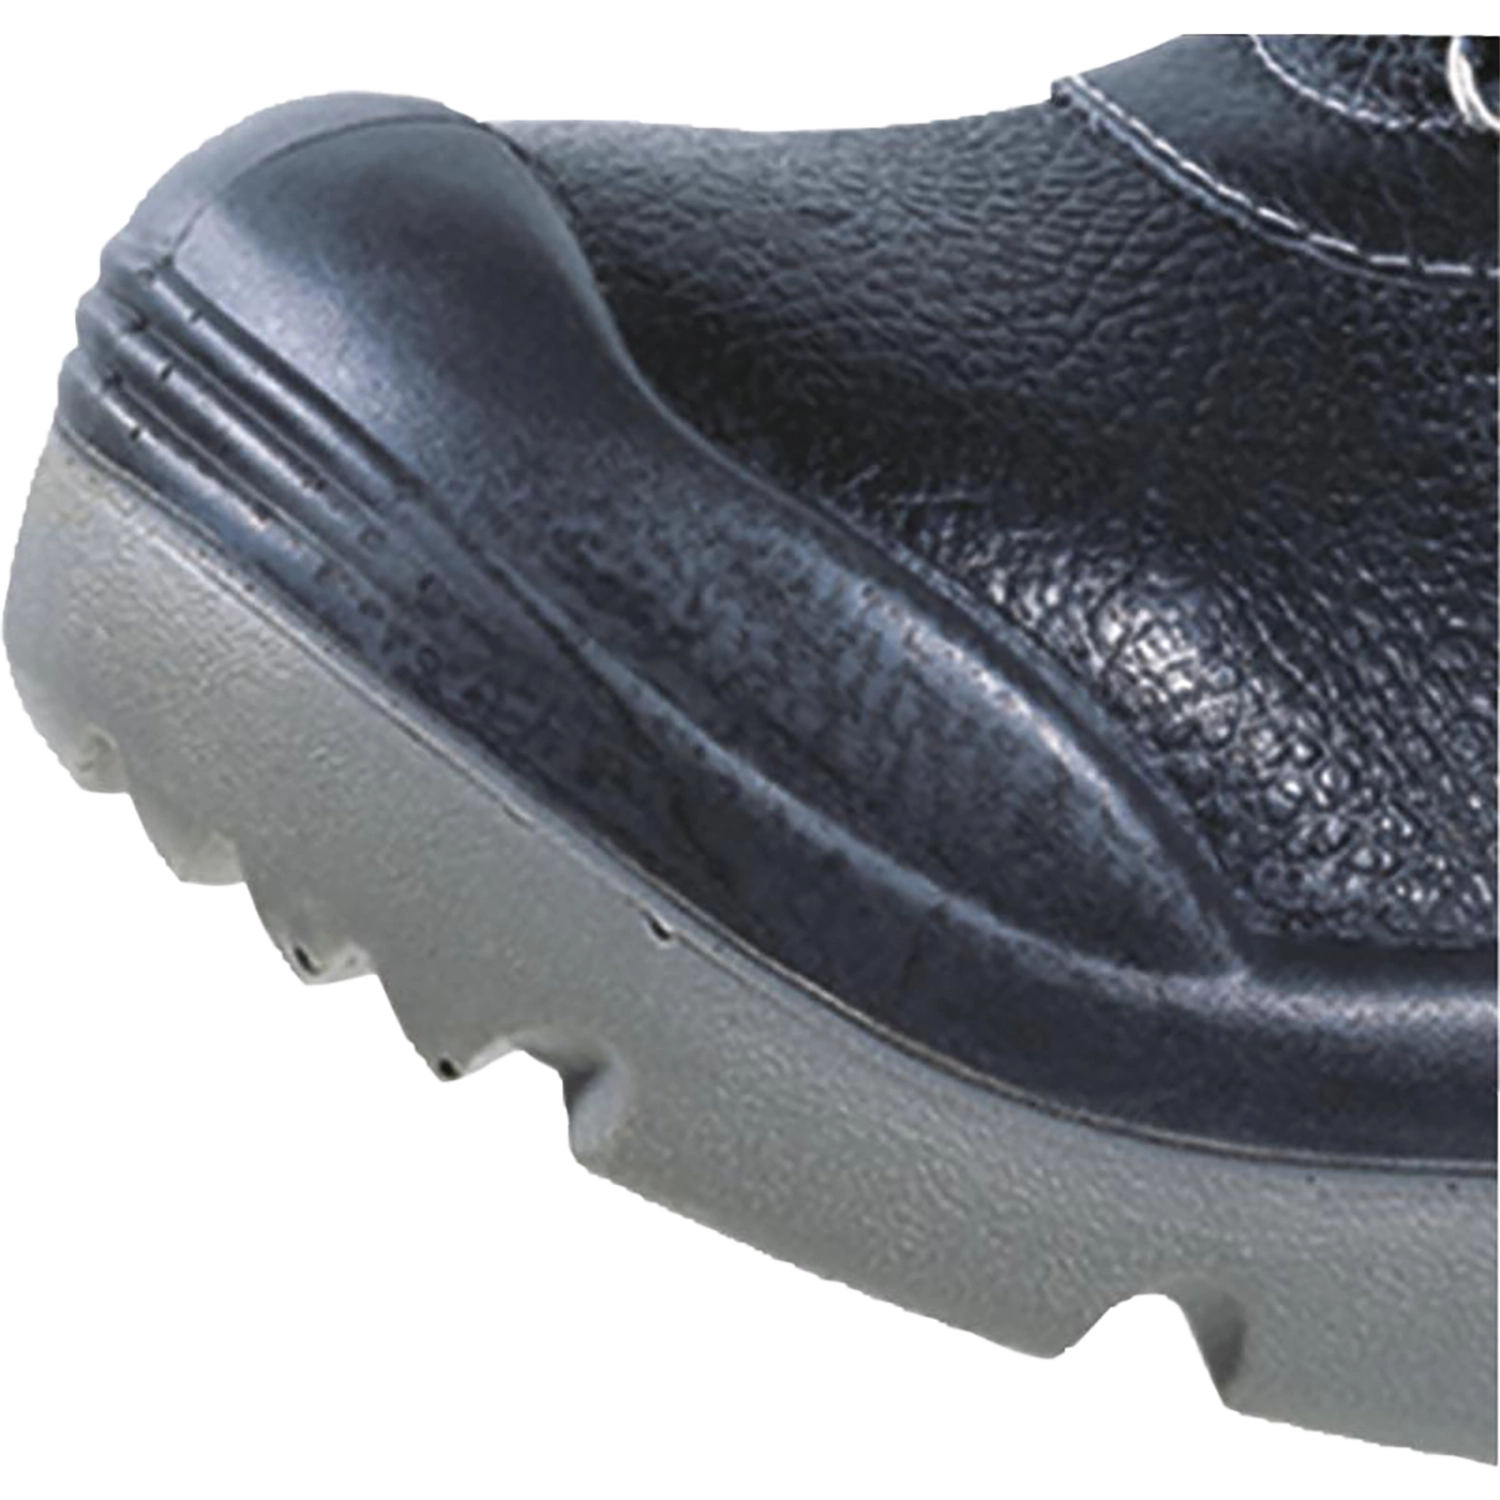 Chaussures montantes - X-Large - Sault S3 - noir - taille 49